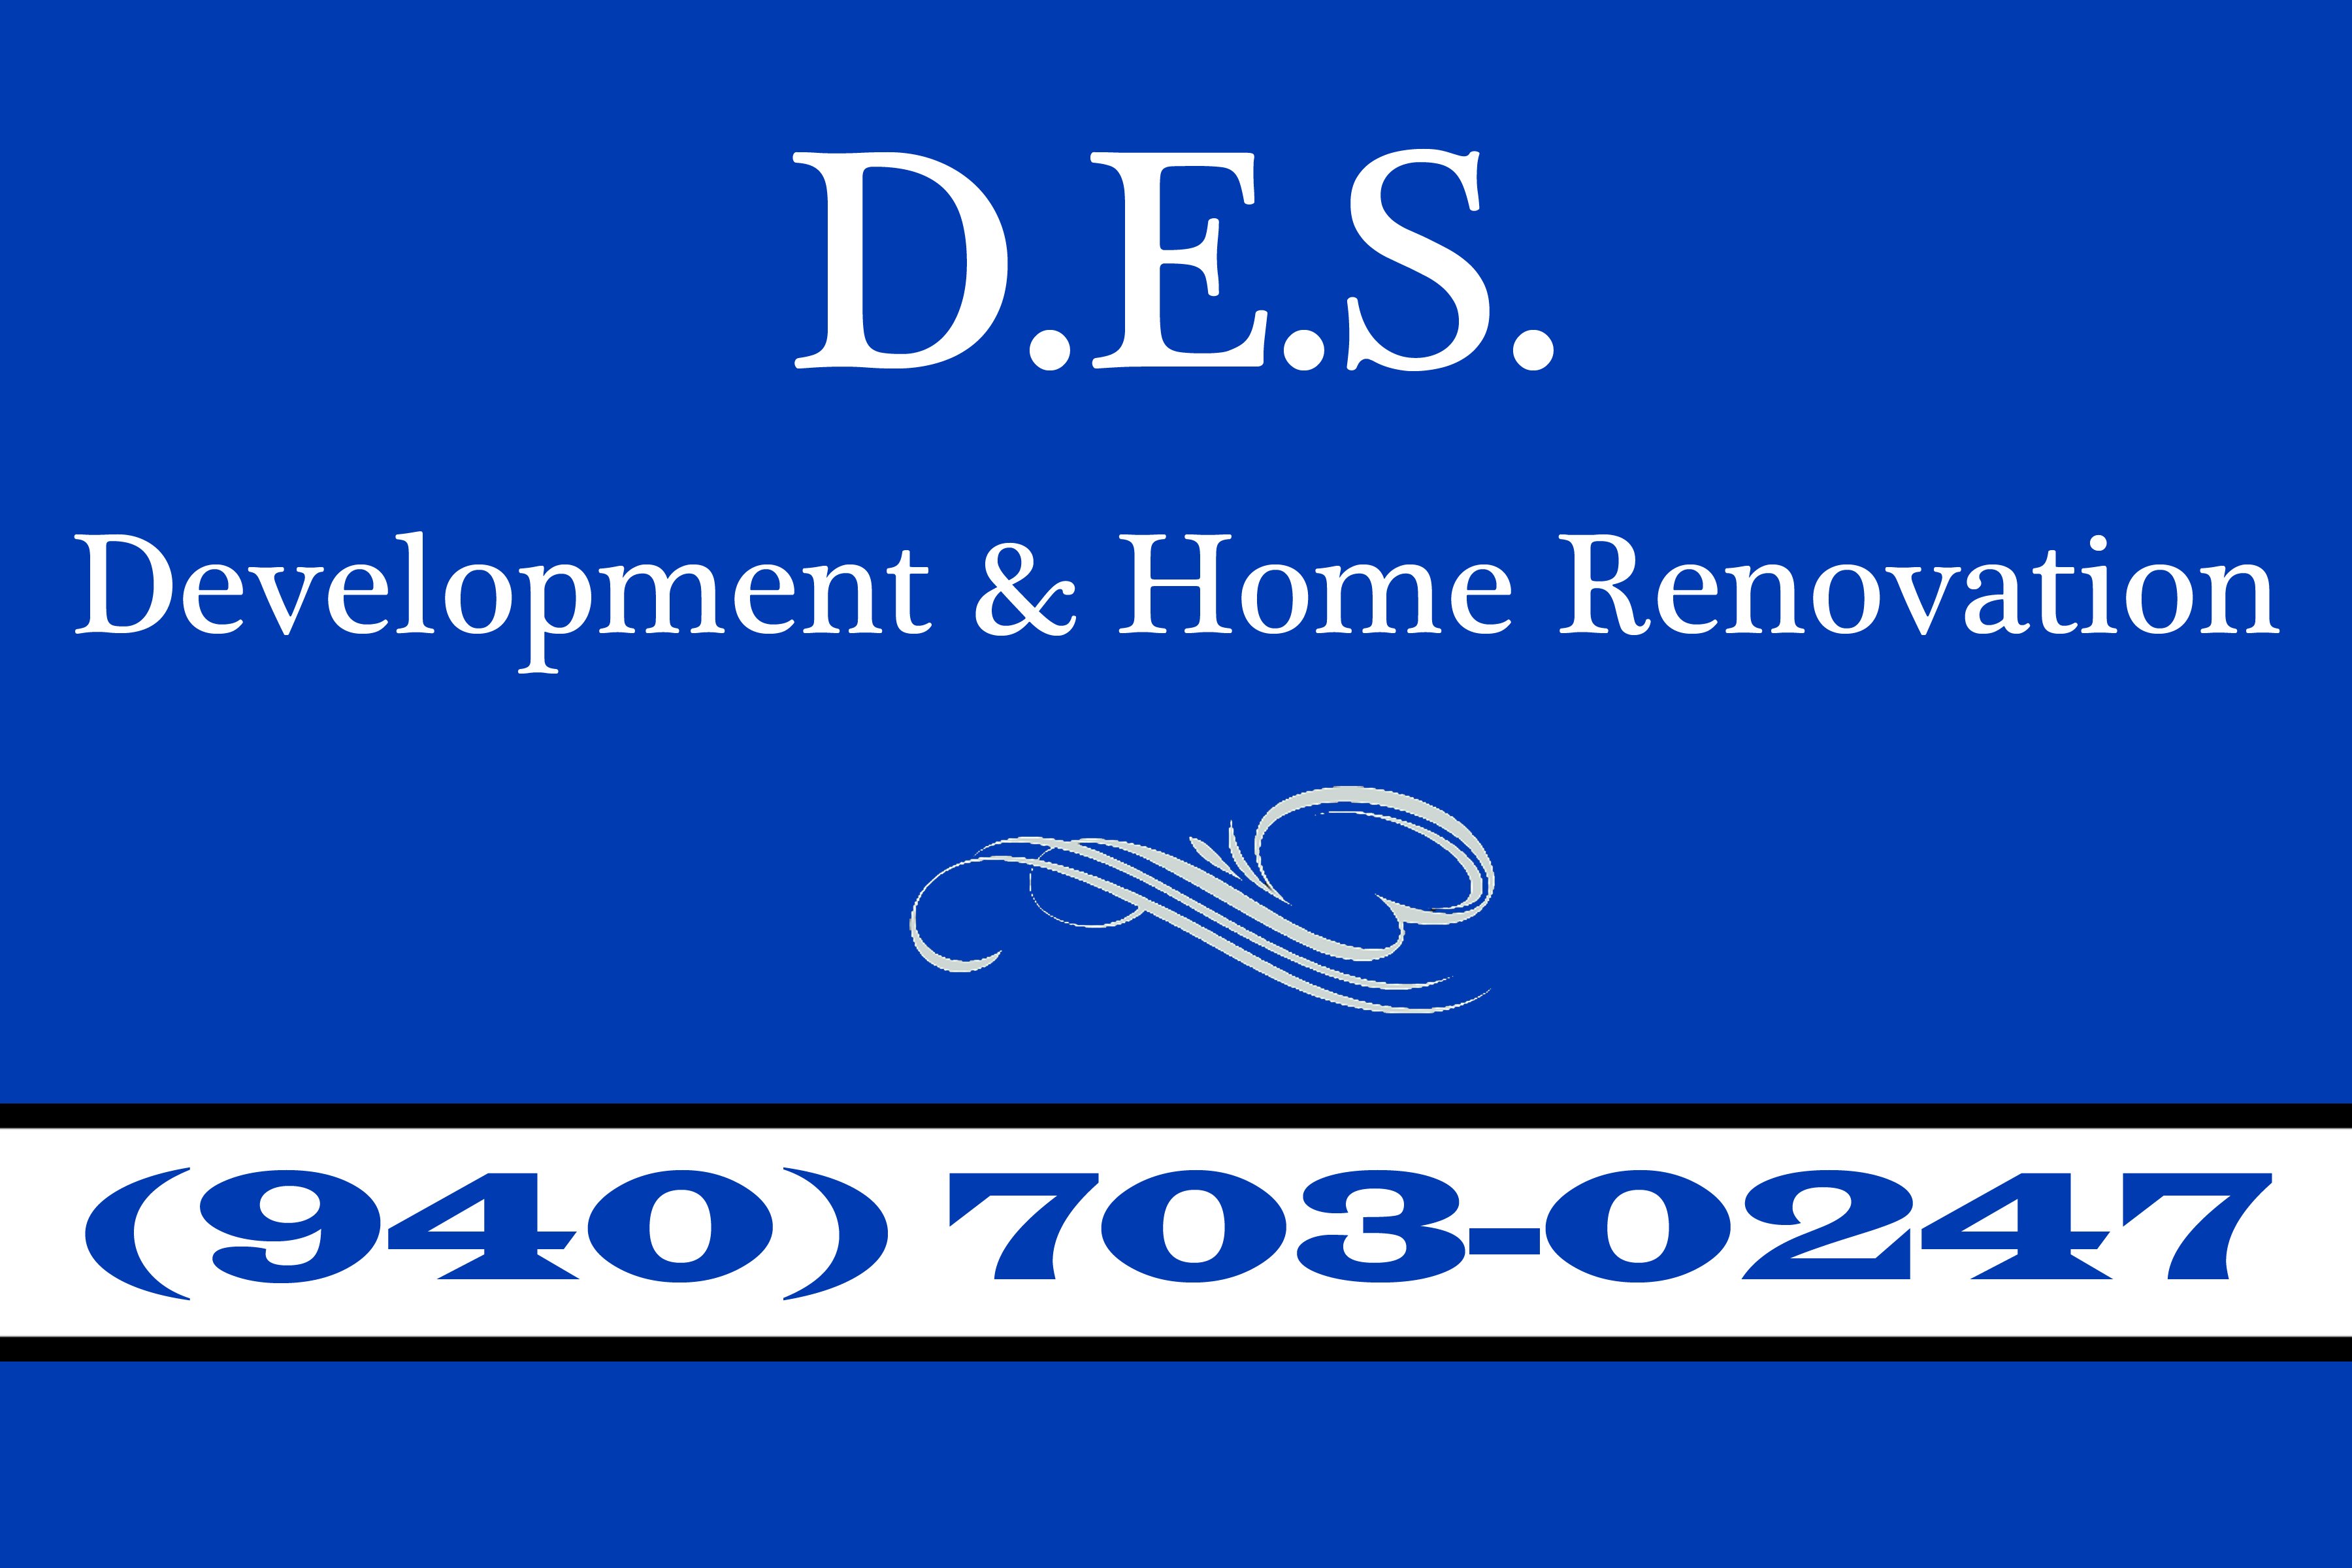 DES Renovations & Home Development Logo